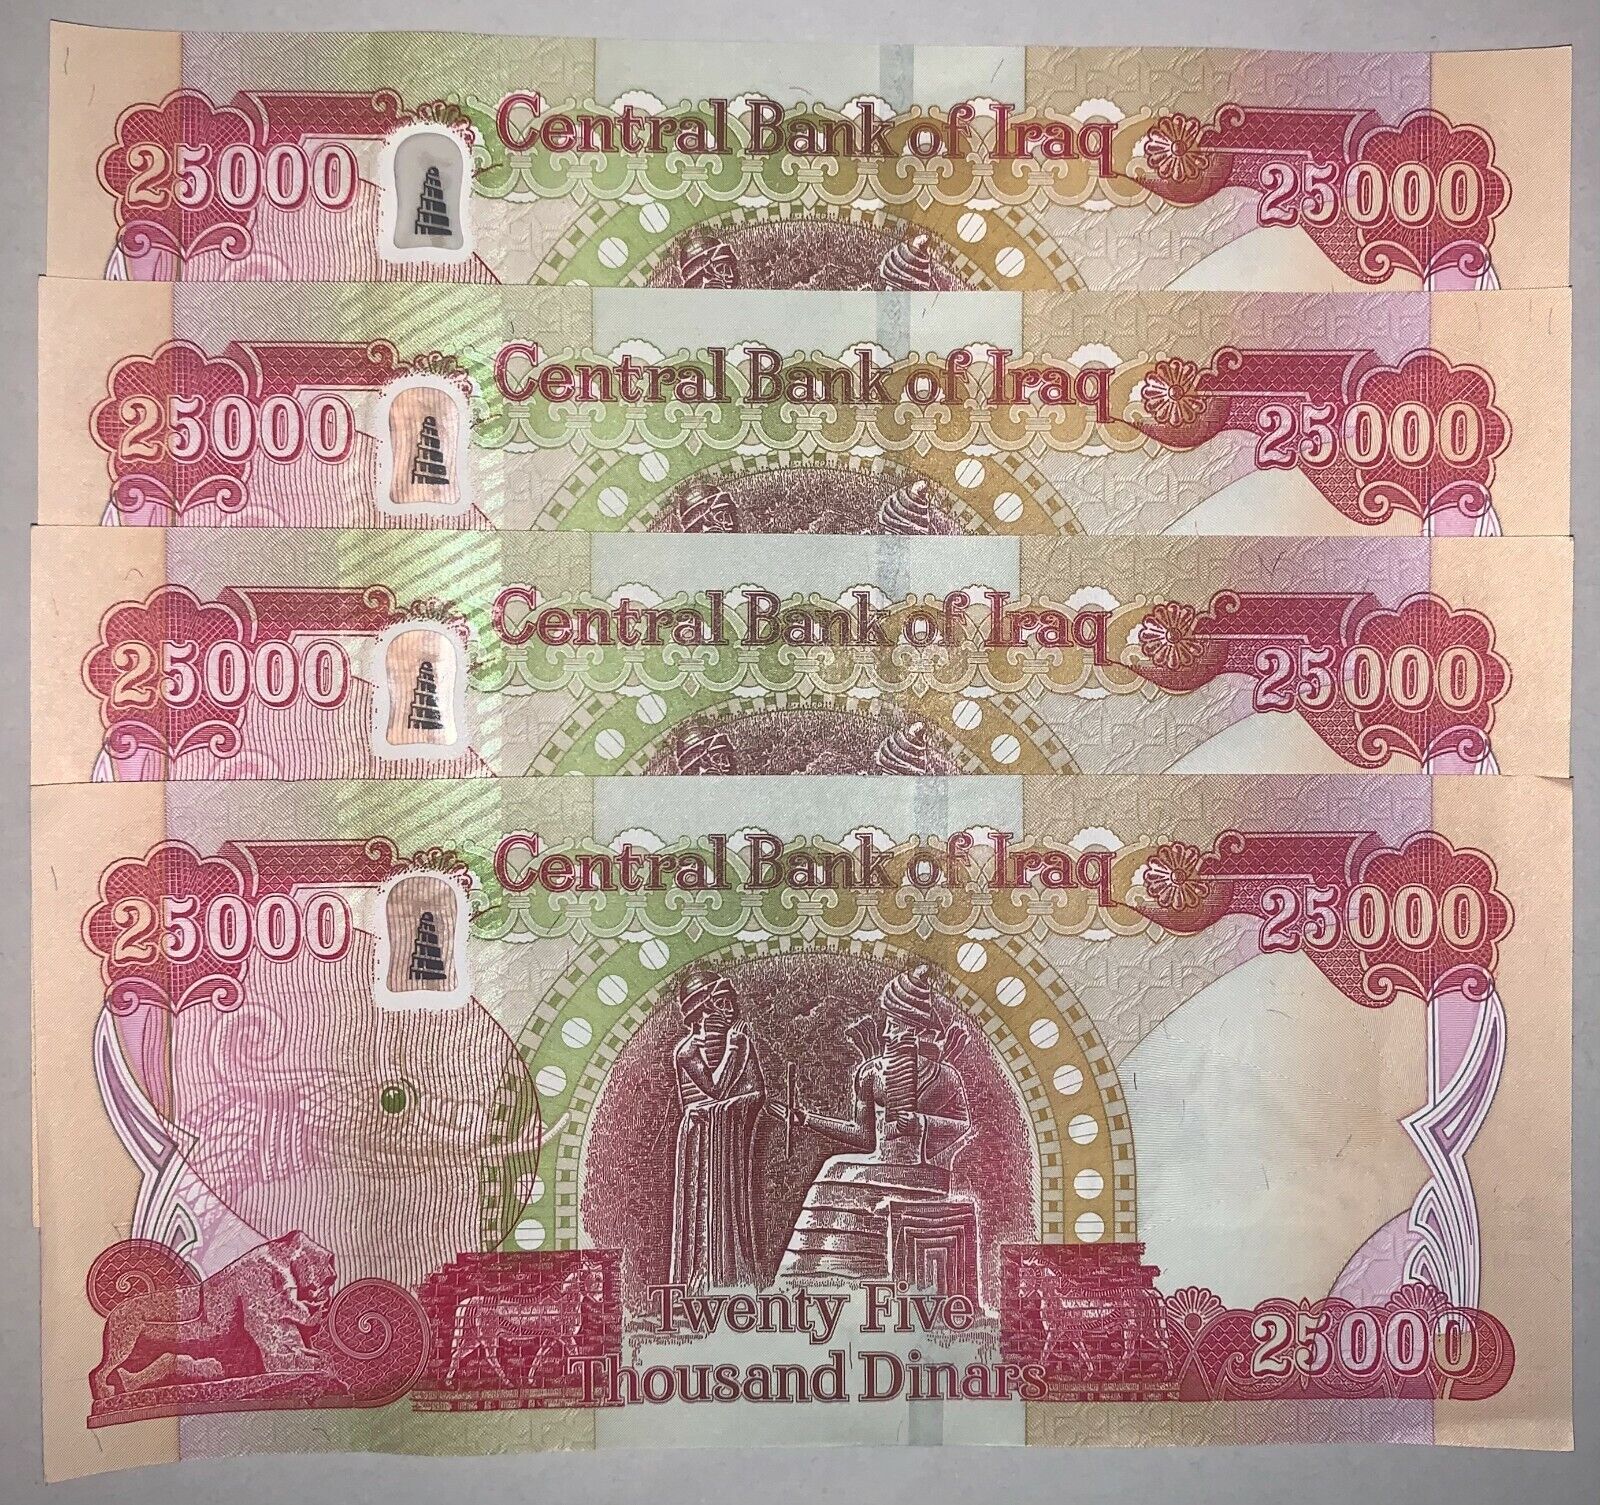 100,000 IRAQI DINAR     UNCIRCULATED 25000 Notes     ( 4 x 25K )        NEW IQD